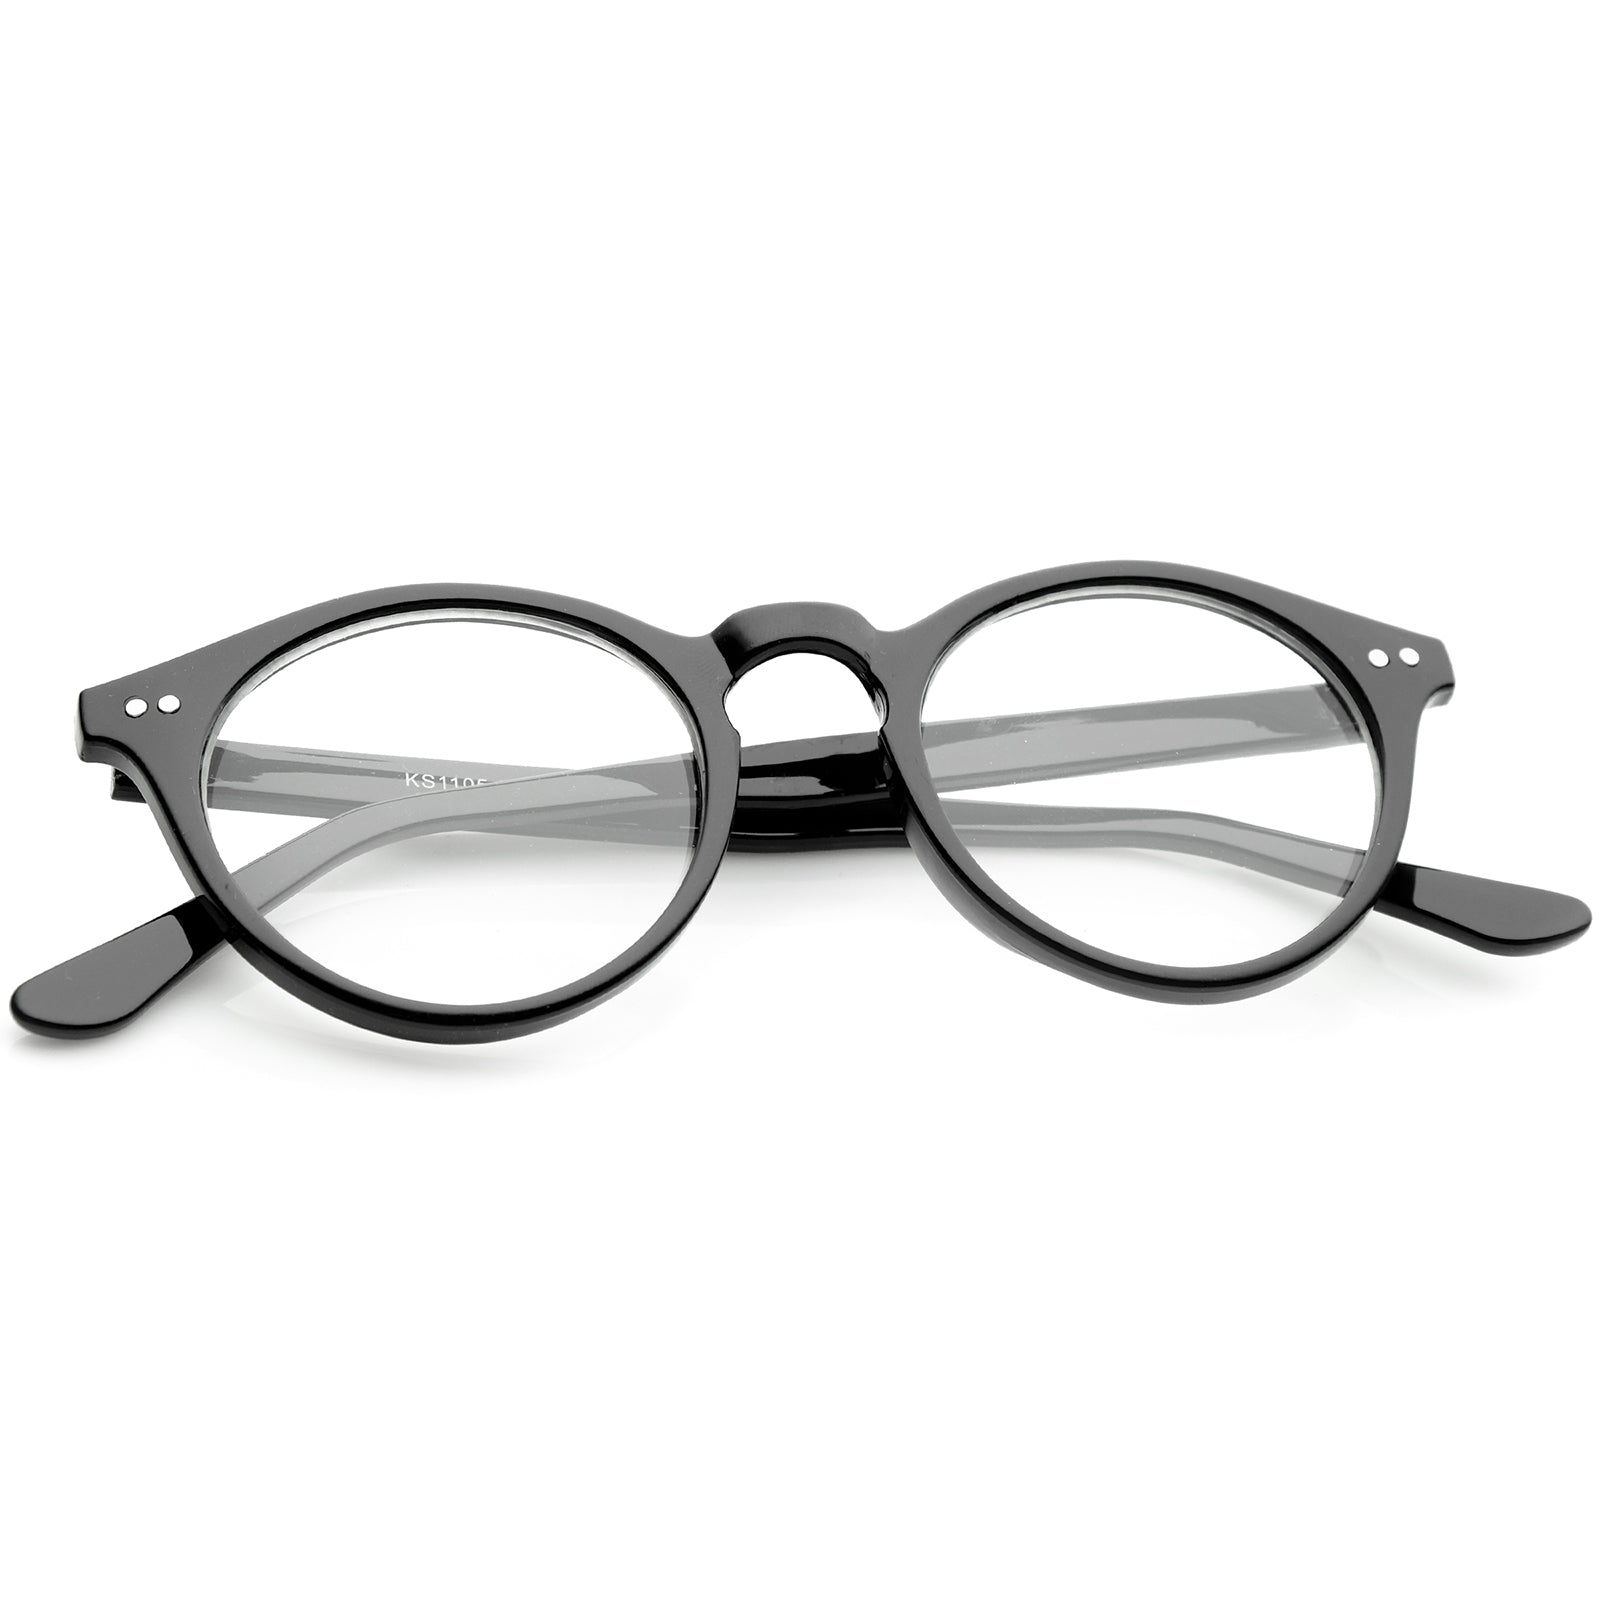 Wholesale Cat Eye Glasses Frames Women 2020 Brand Design Big Frame Glasses  Frame Transparent Sunglasses Female Clear Lens Spectacle From m.